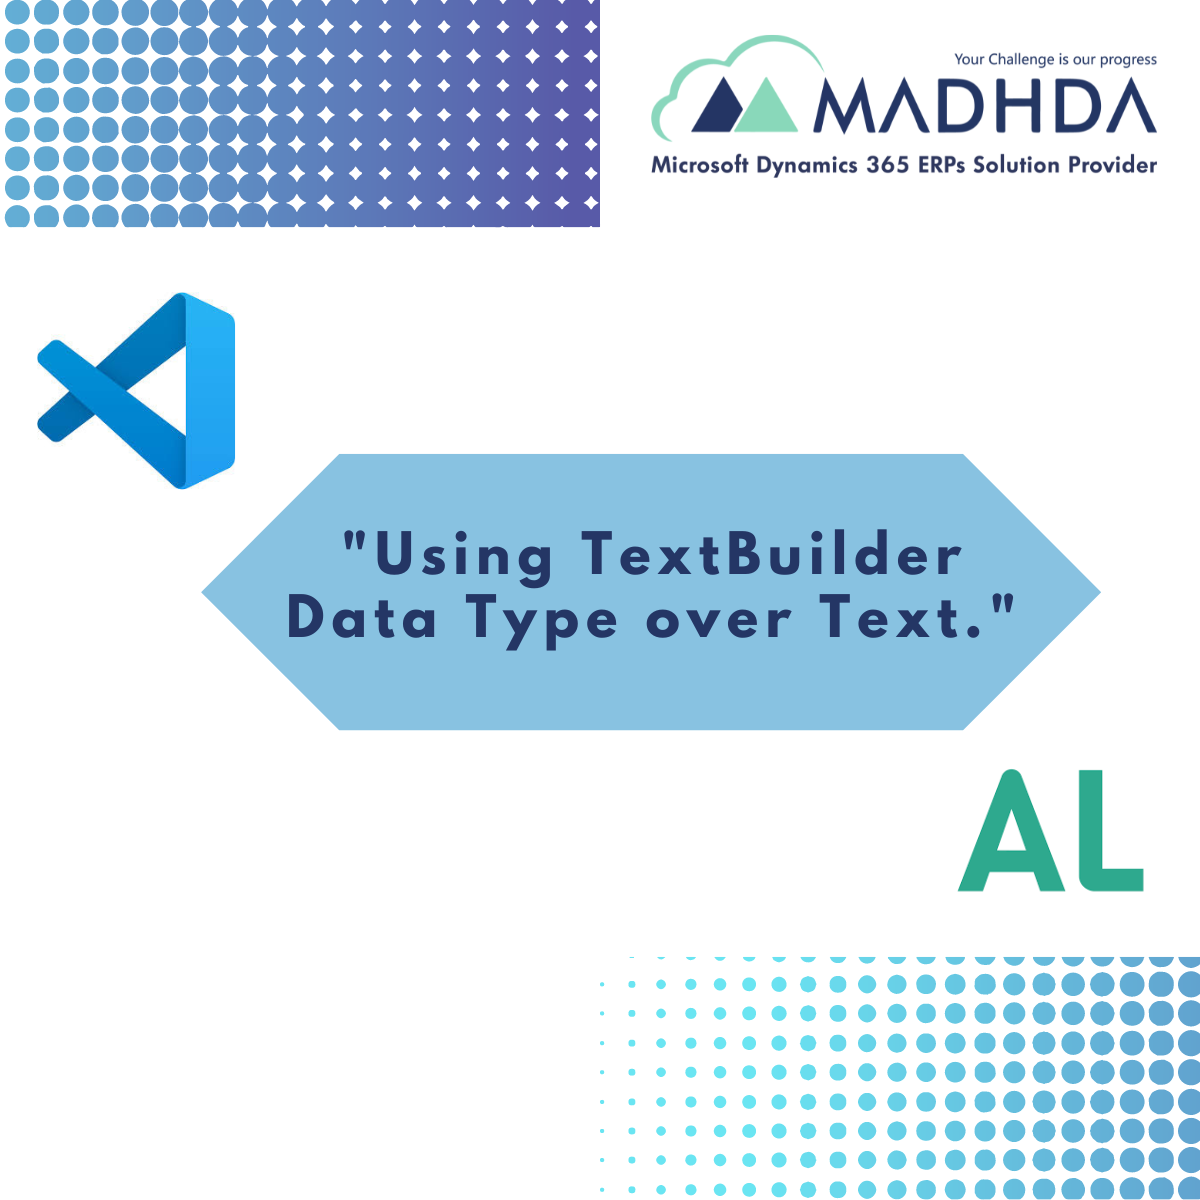 using TextBuilder Data Type over Text.